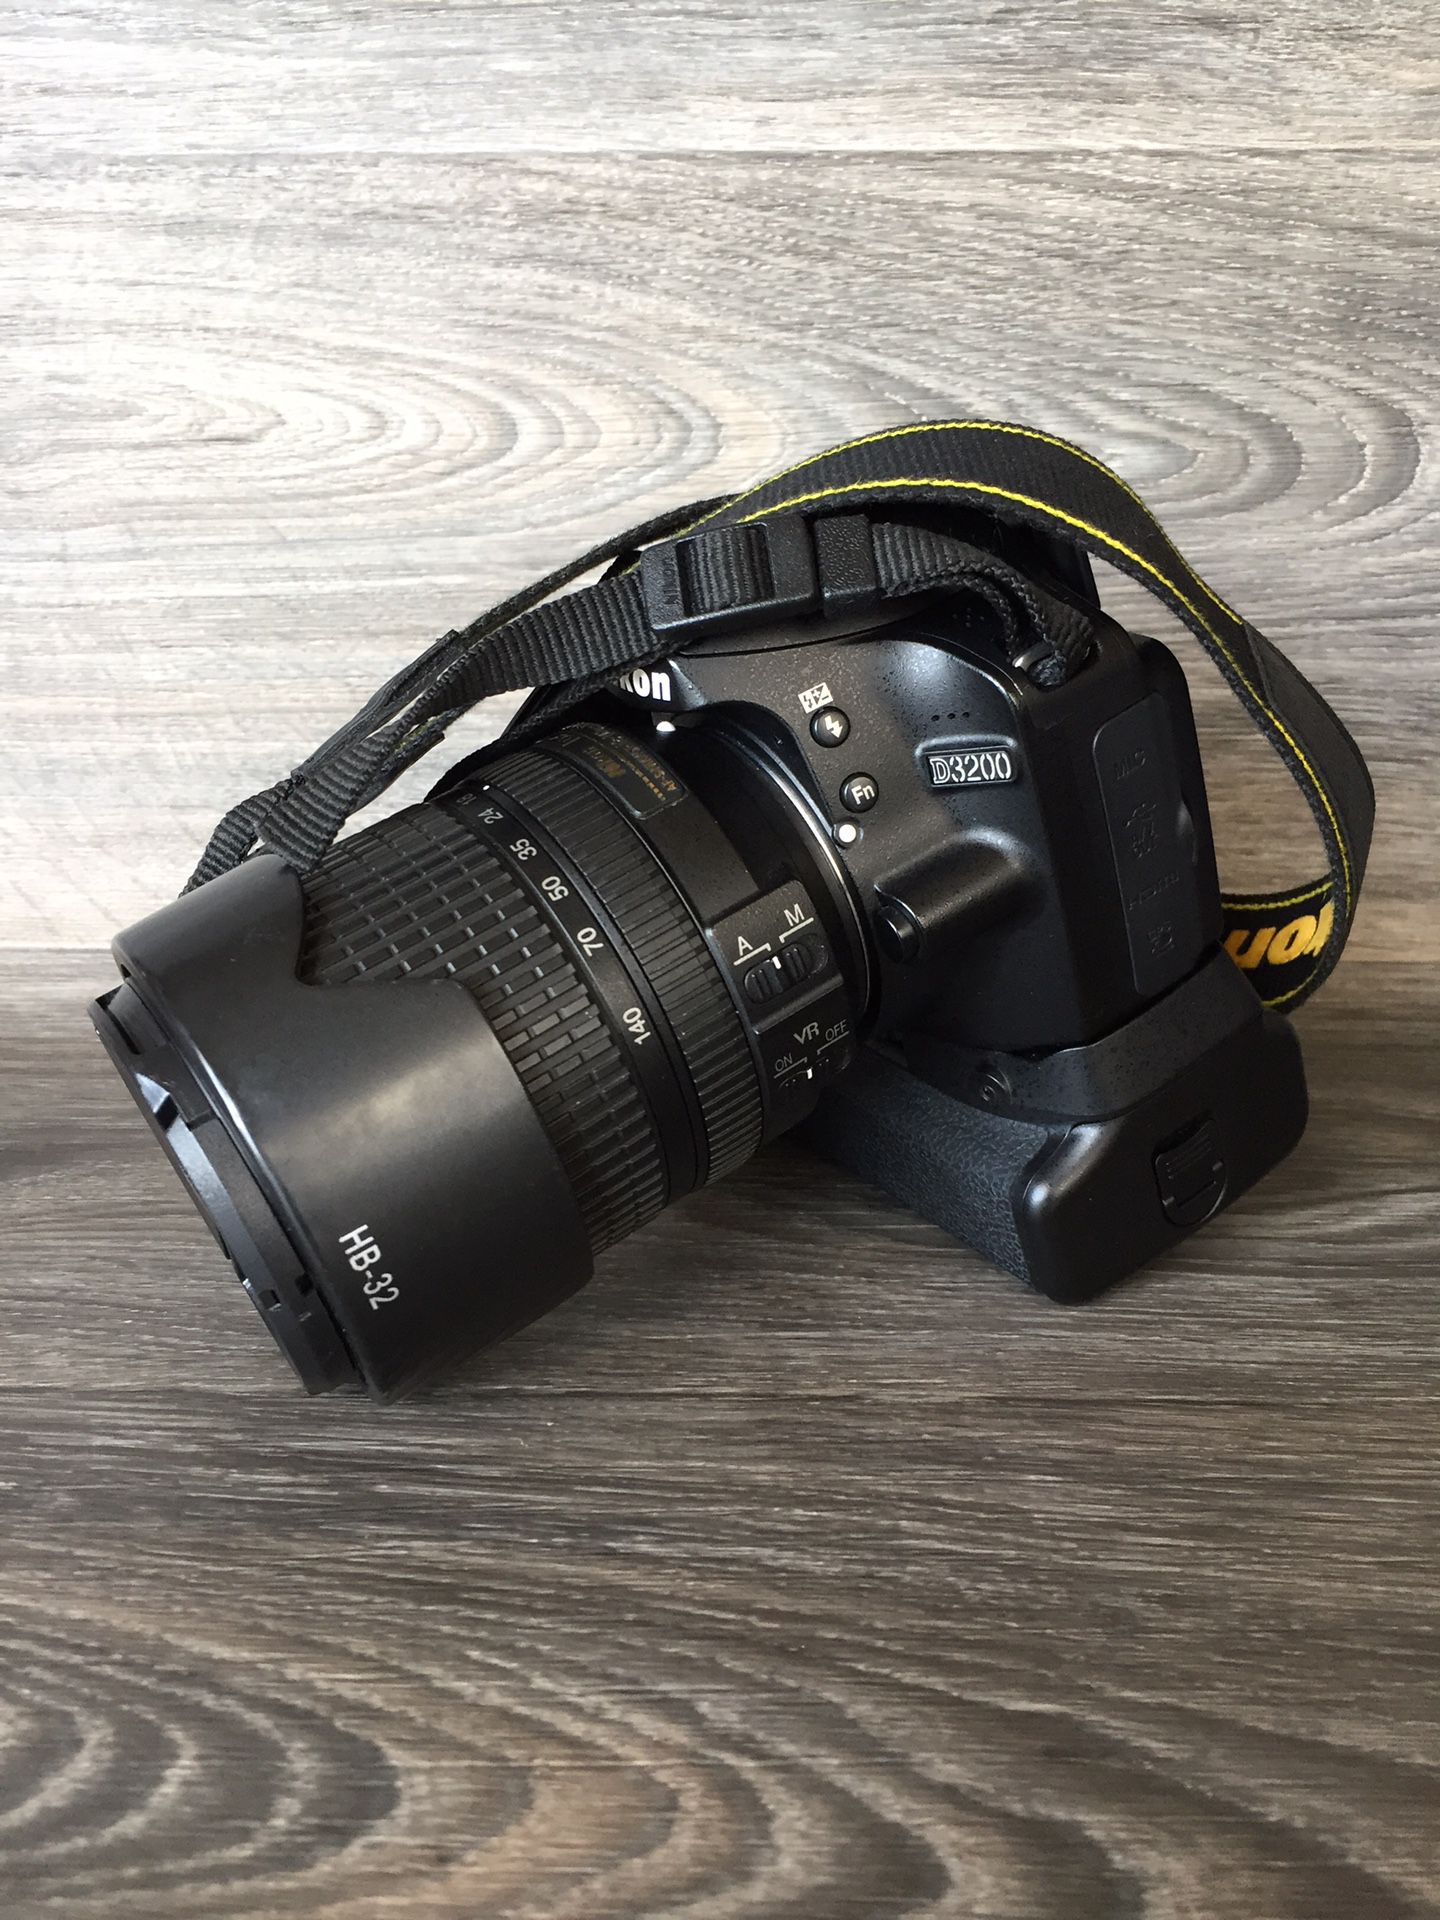 Nikon D3200 - DSLR Camera - W/ 18-140mm Lens, Battery Pack (x2 Batteries), & Charger